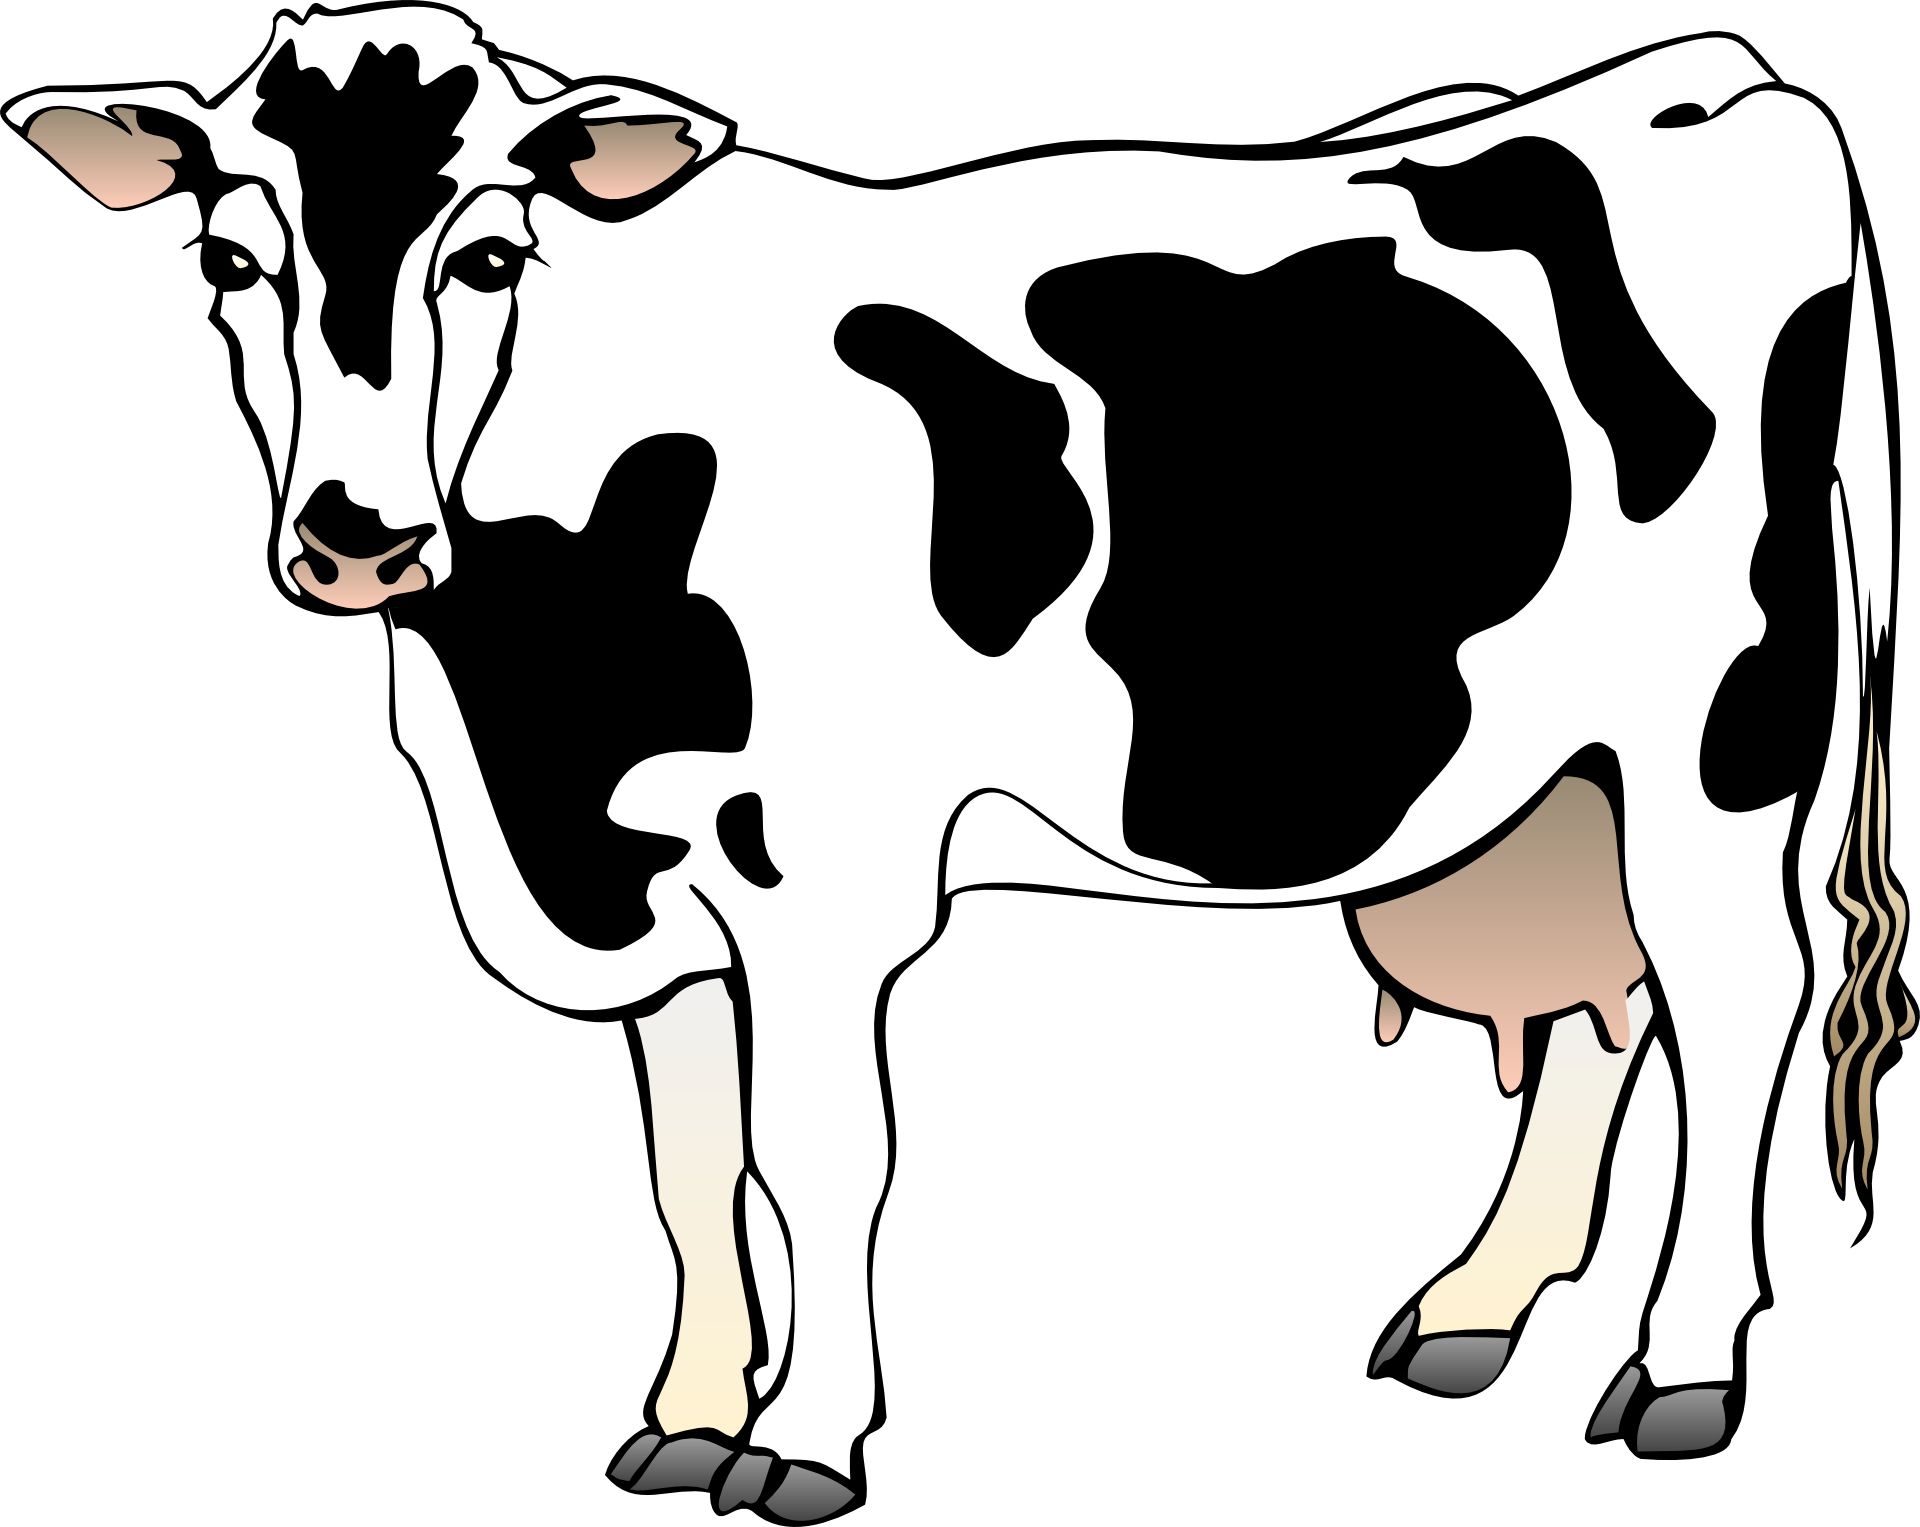 Cow vectorcartoon animal.